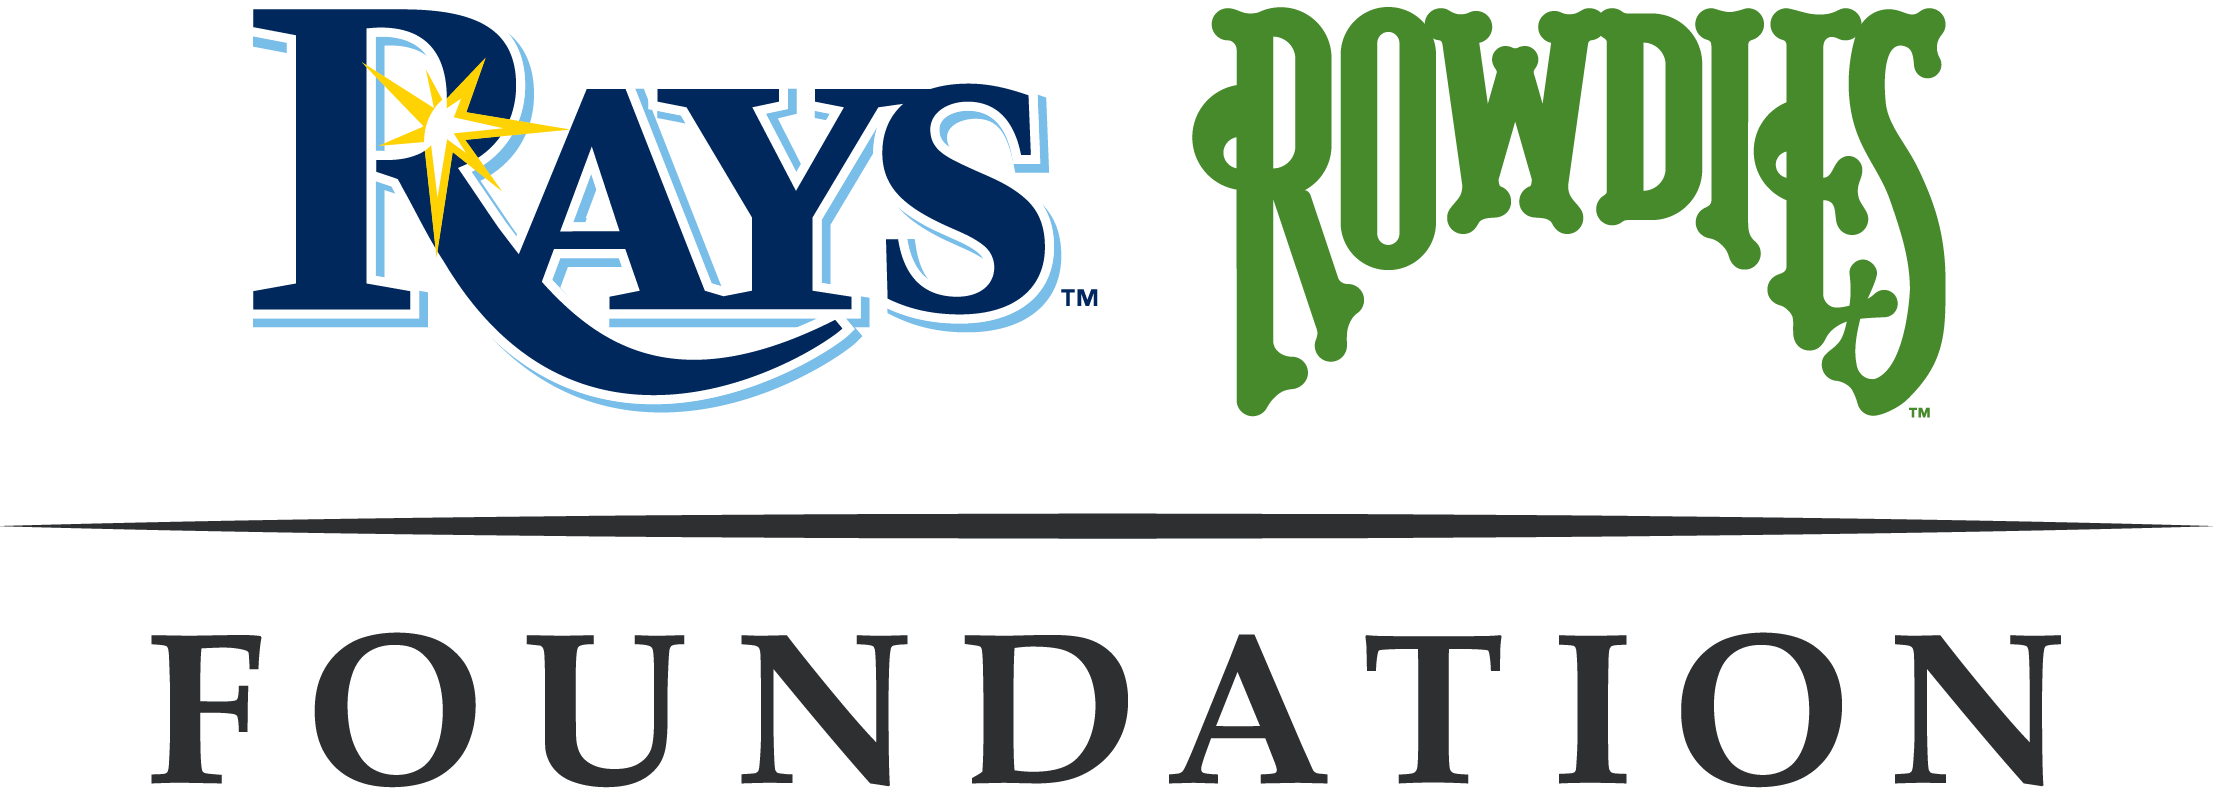 Rays Rowdies Foundation